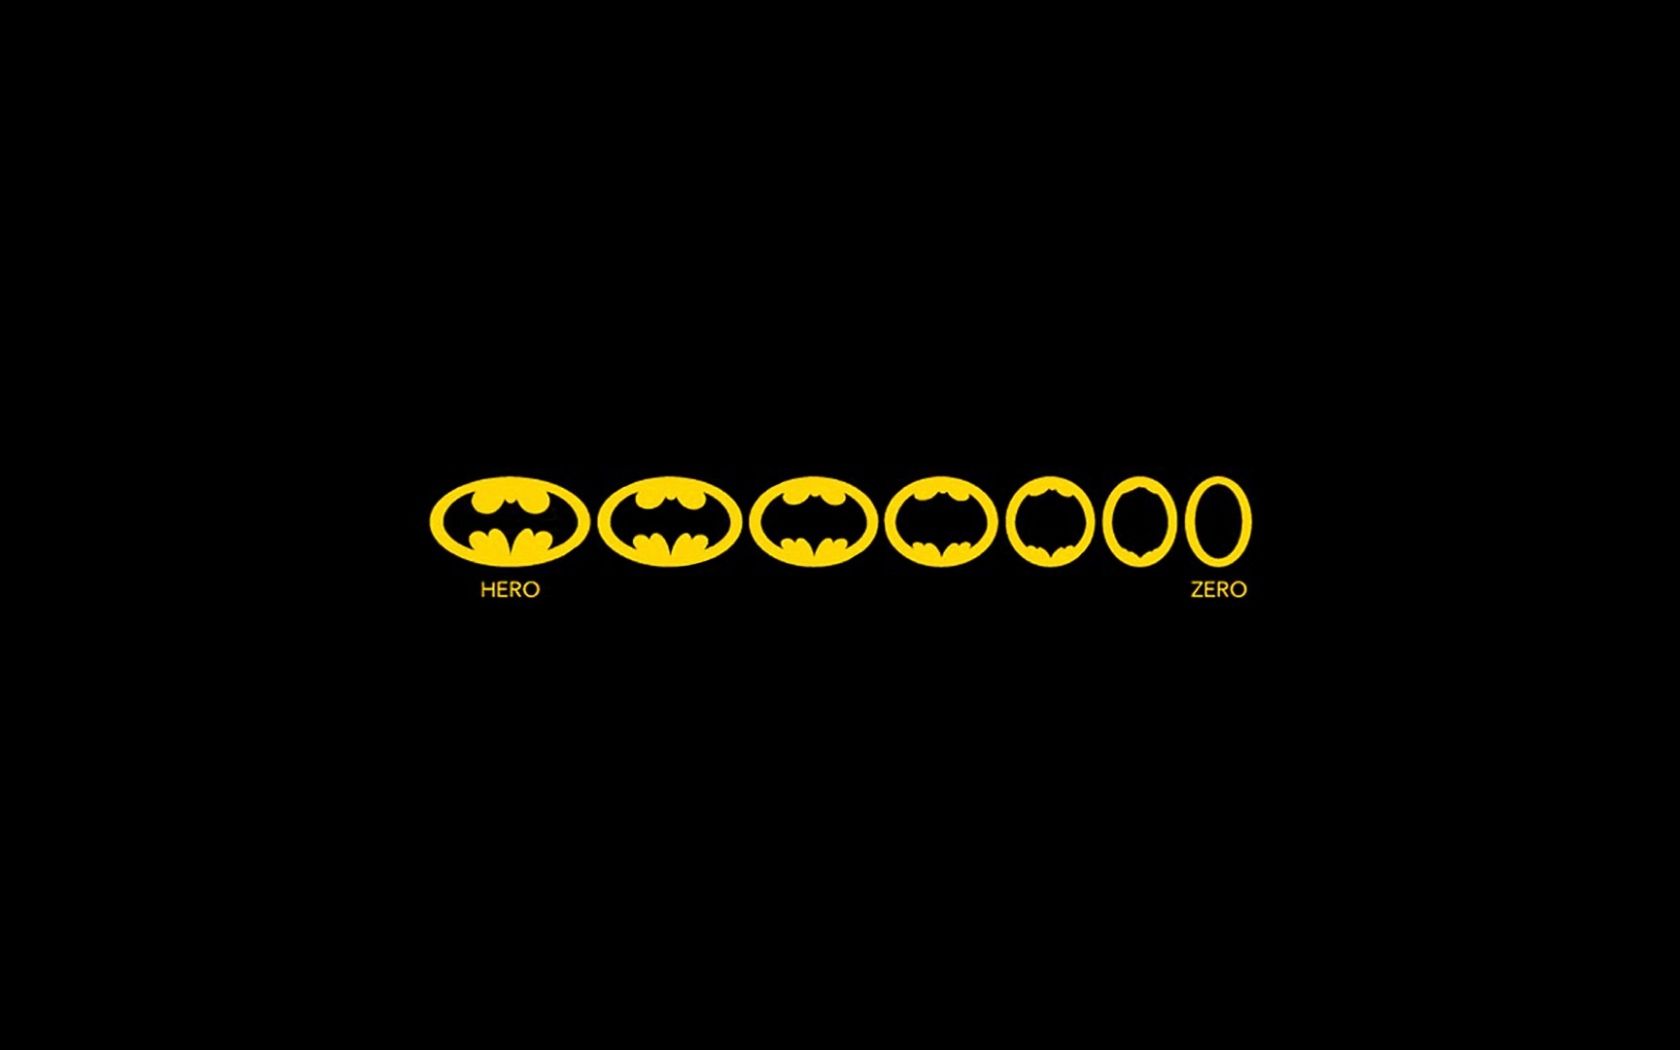 Free download funny cool wallpaper wallpaper hero batman 1920x1080 [1920x1080] for your Desktop, Mobile & Tablet. Explore Batman Cool Wallpaper. Free Batman Wallpaper, Best Batman Wallpaper, Awesome Batman Wallpaper